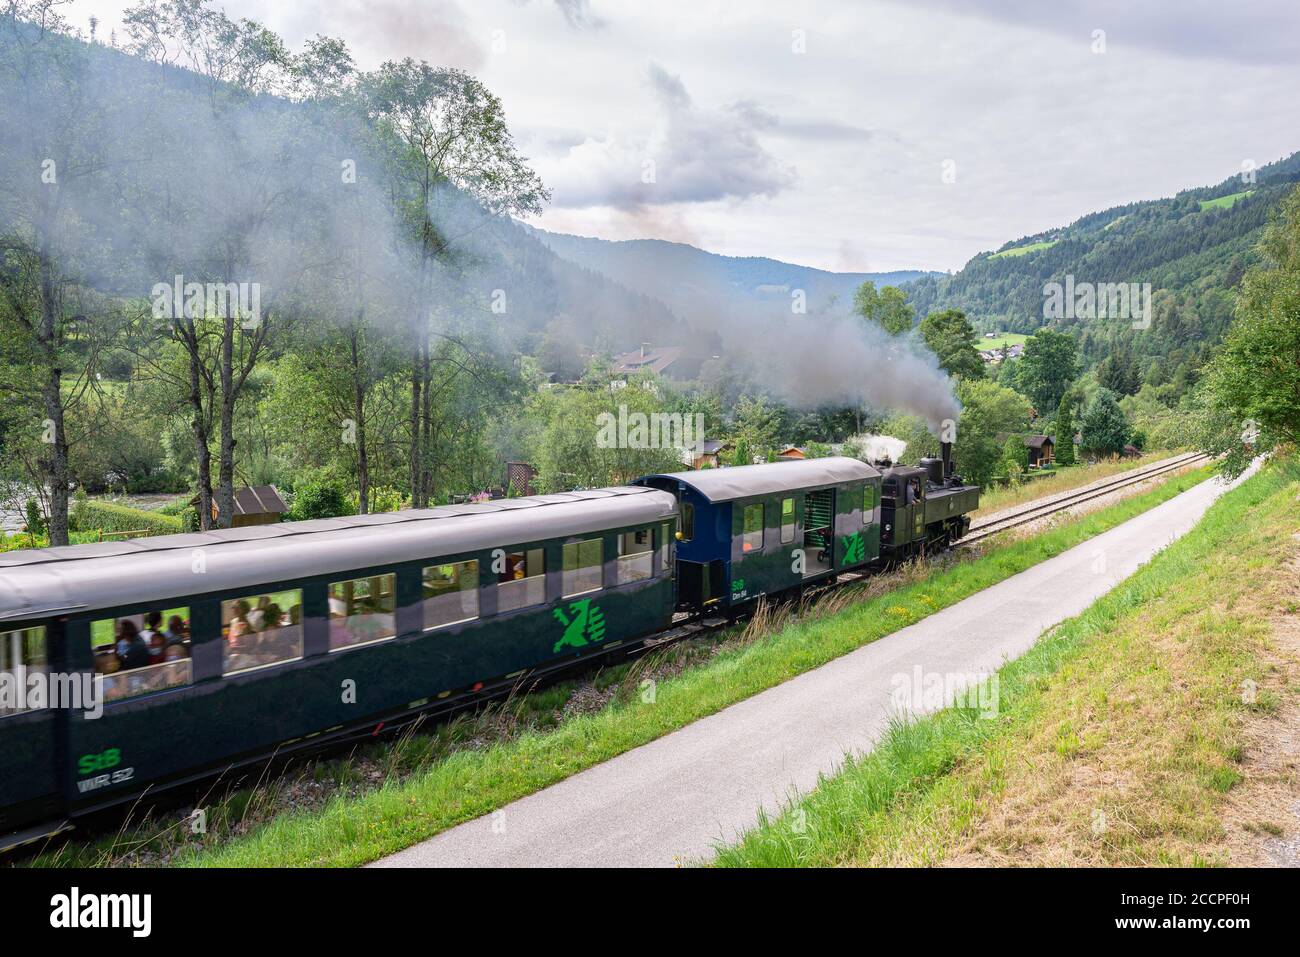 Tourist steam train 'Murtalbahn', runs between the cities of Murau and Tamsweg in Austria. Rail cars are slightly blurred from train movement. Stock Photo